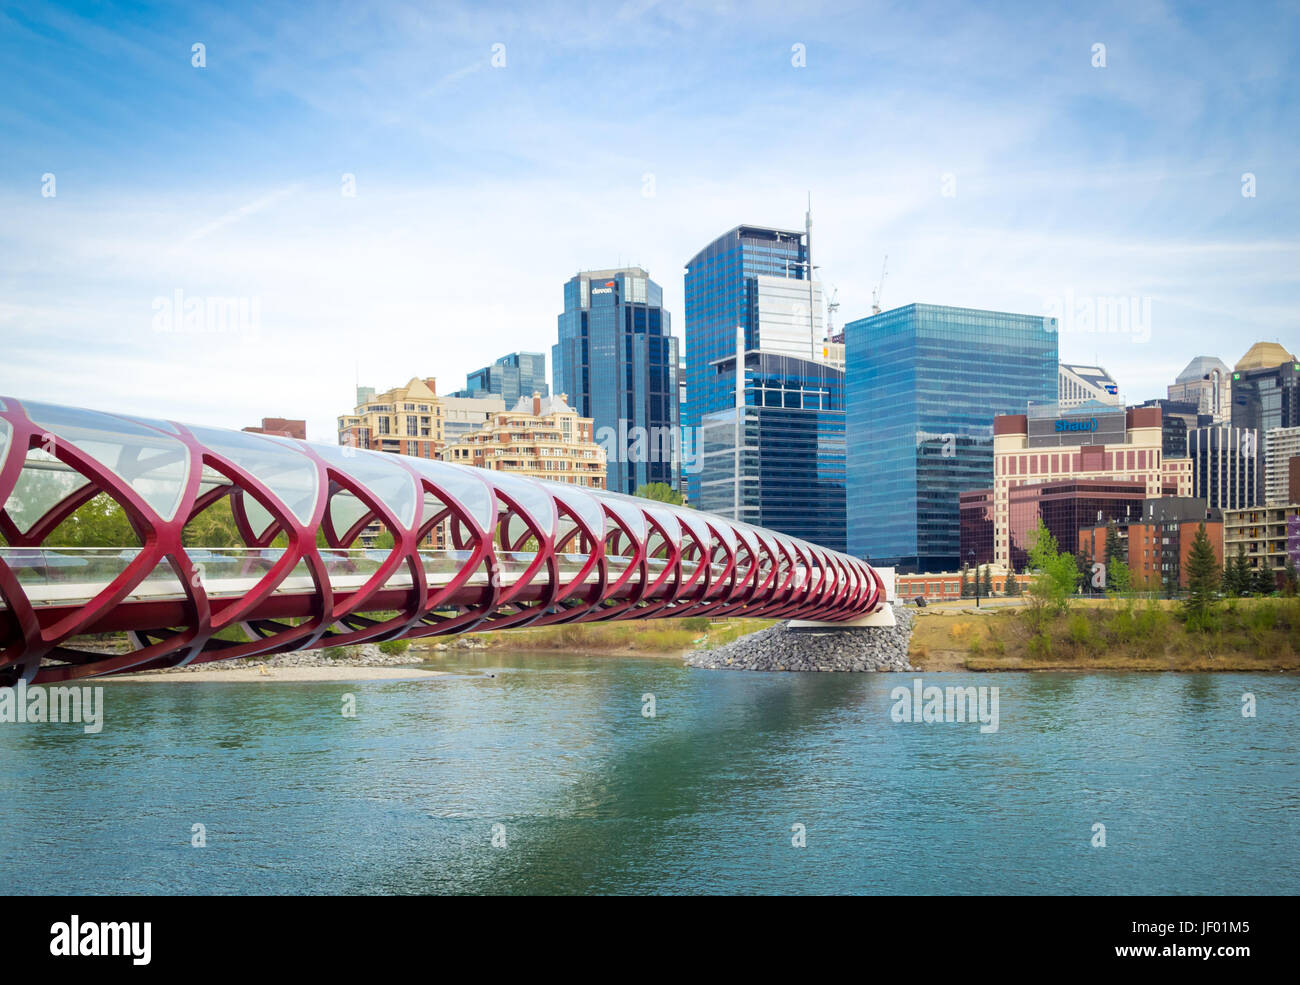 A view of the Peace Bridge (designed by Santiago Calatrava) and the skyline of Calgary, Alberta, Canada. Stock Photo